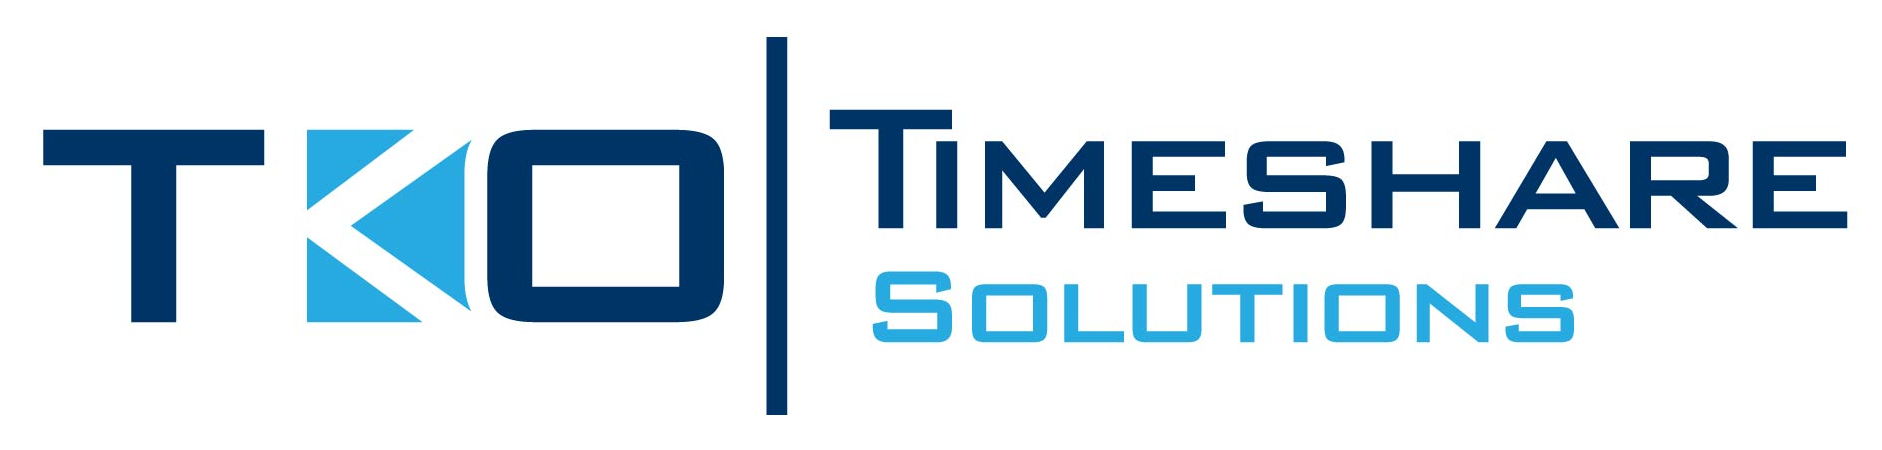 TKO Timeshare Solutions Horizontal Logo